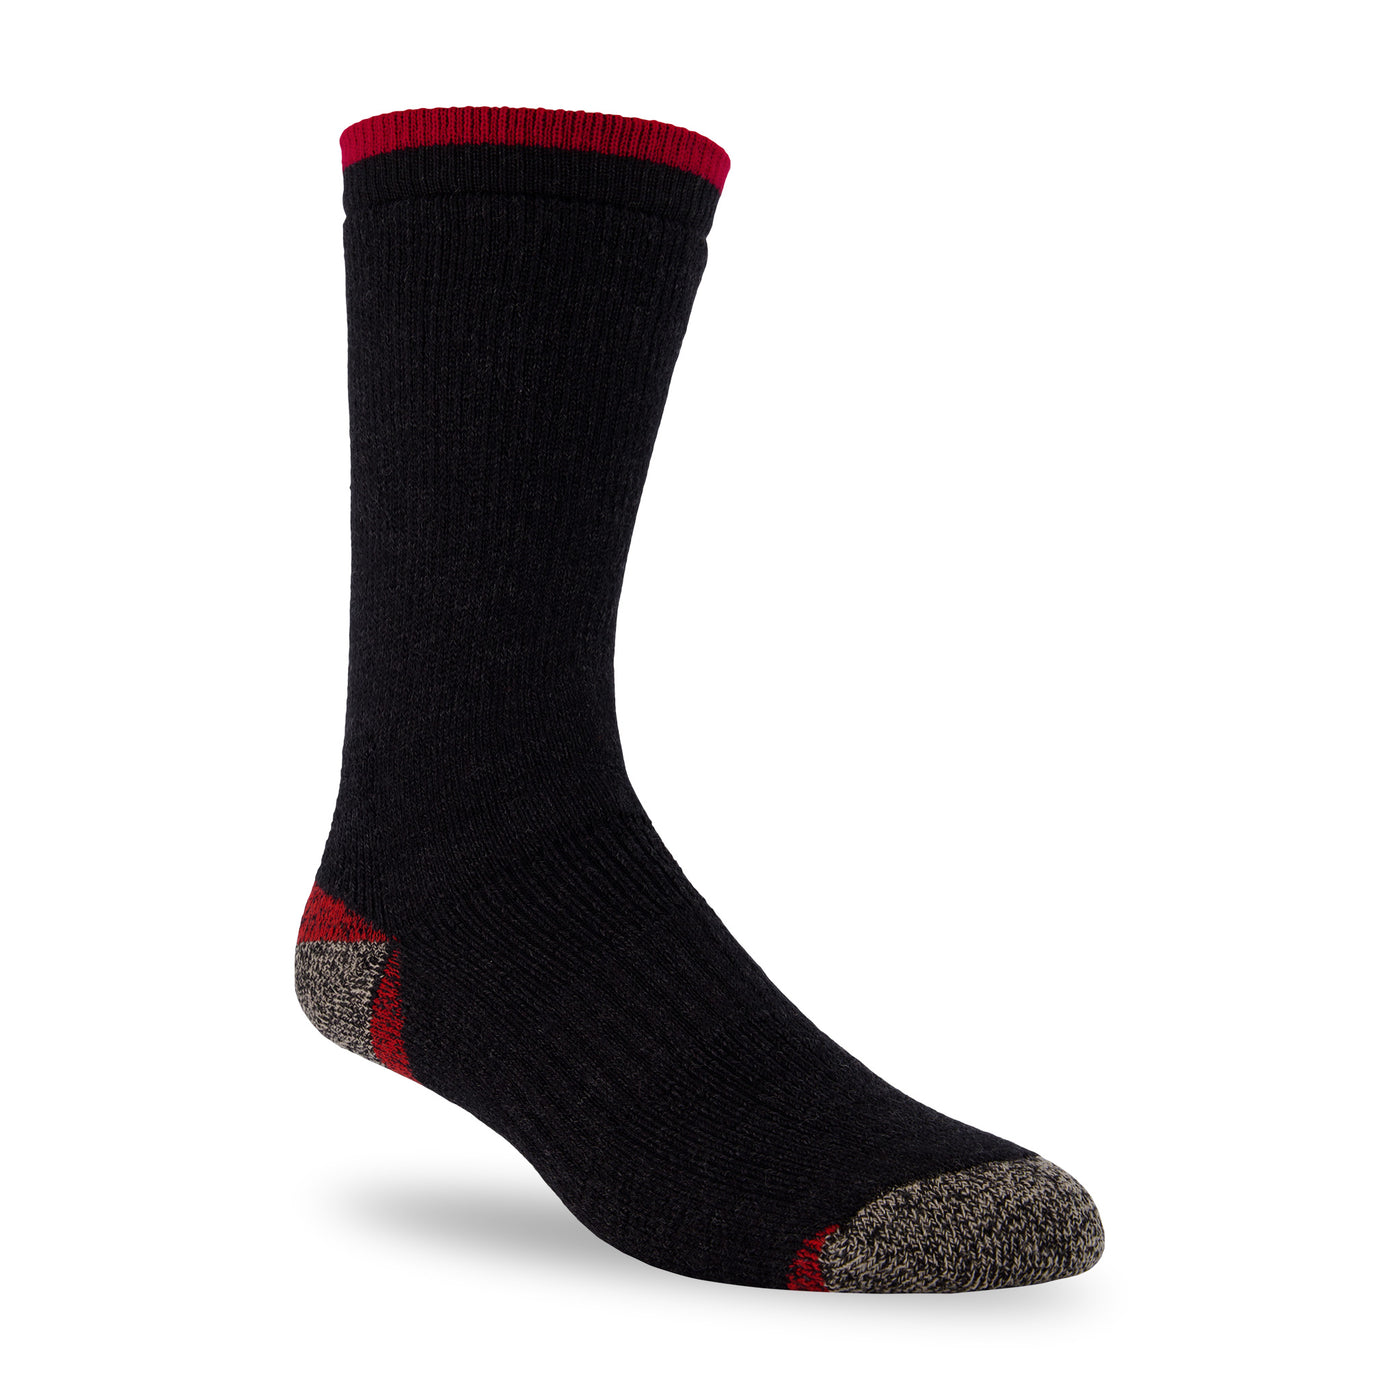 black merino wool socks for hiking